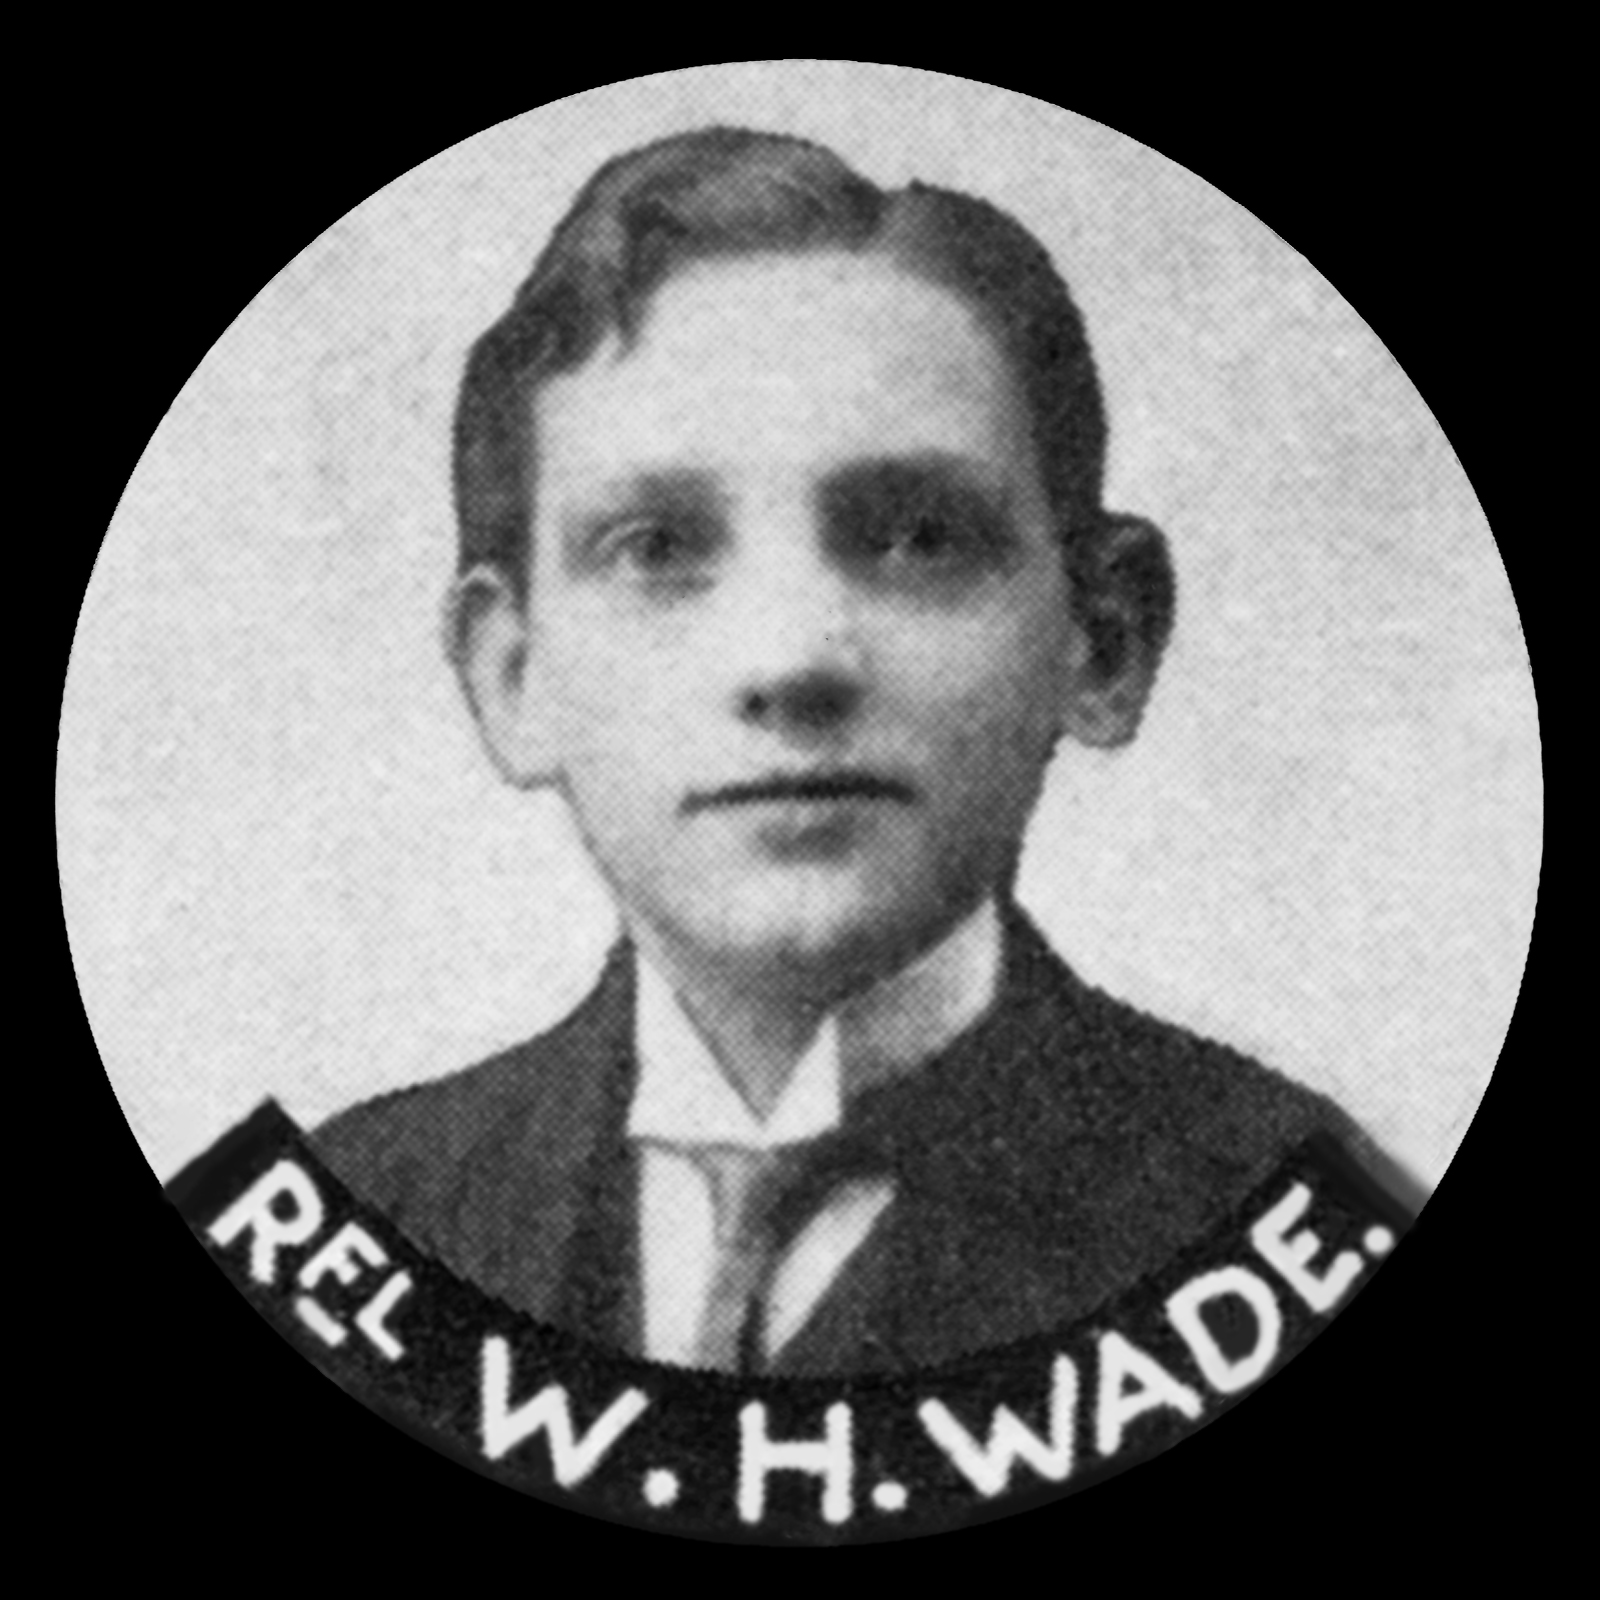 WADE William Harold